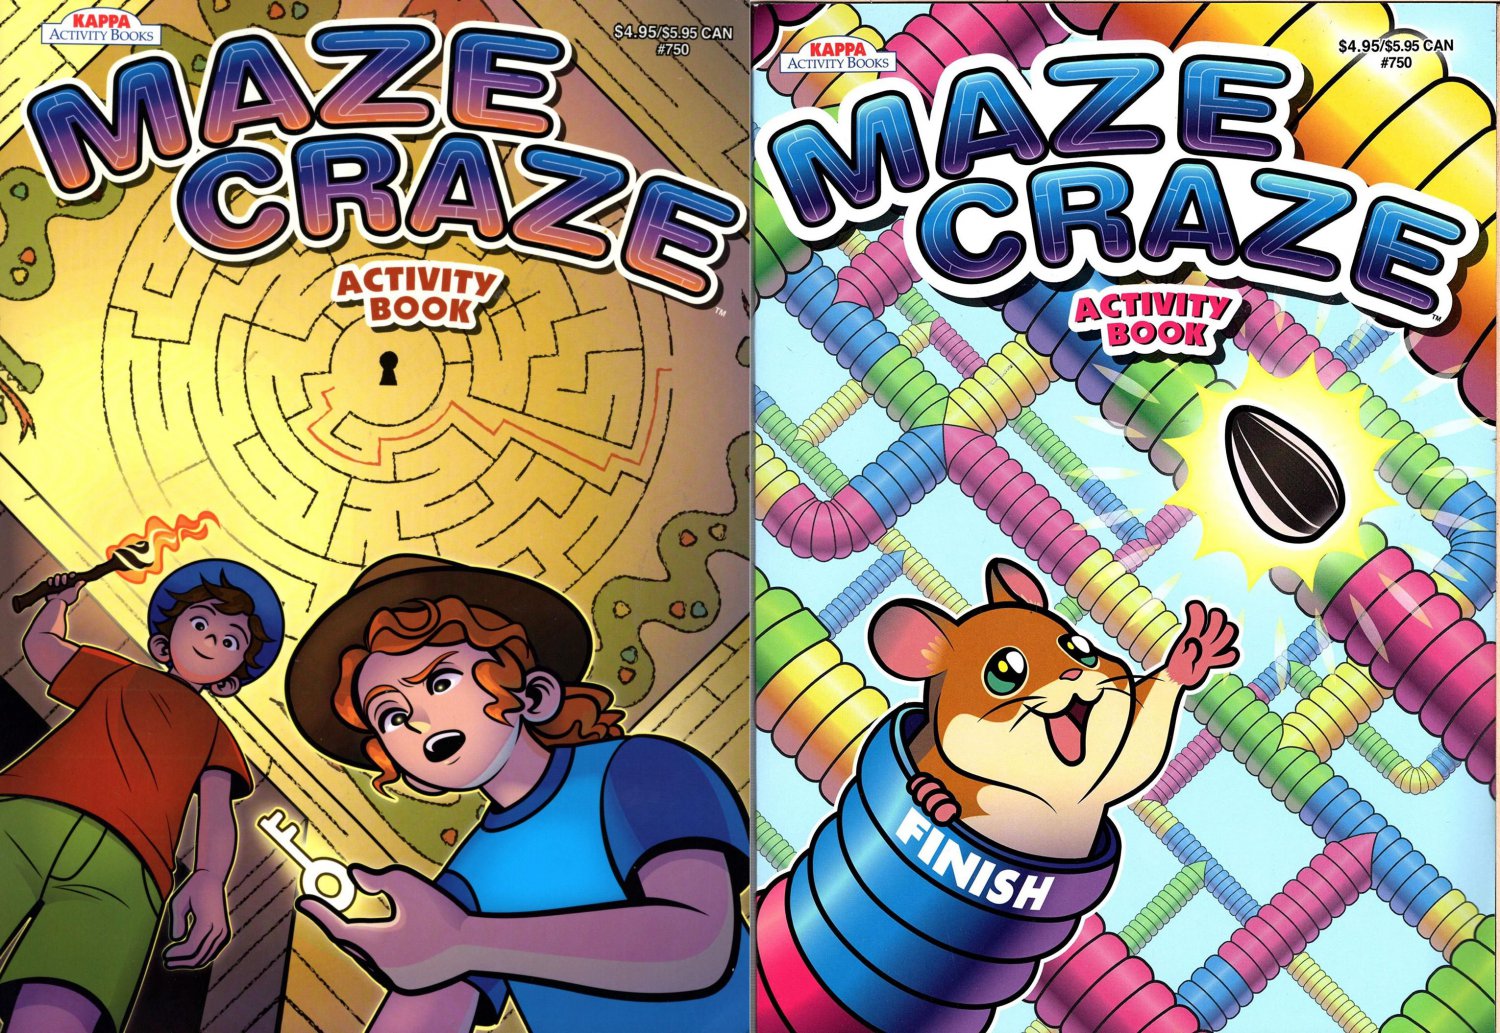 Maze Craze Activity Book for Kids Easy Medium Hard Levels - (Set of 2 Books) v3